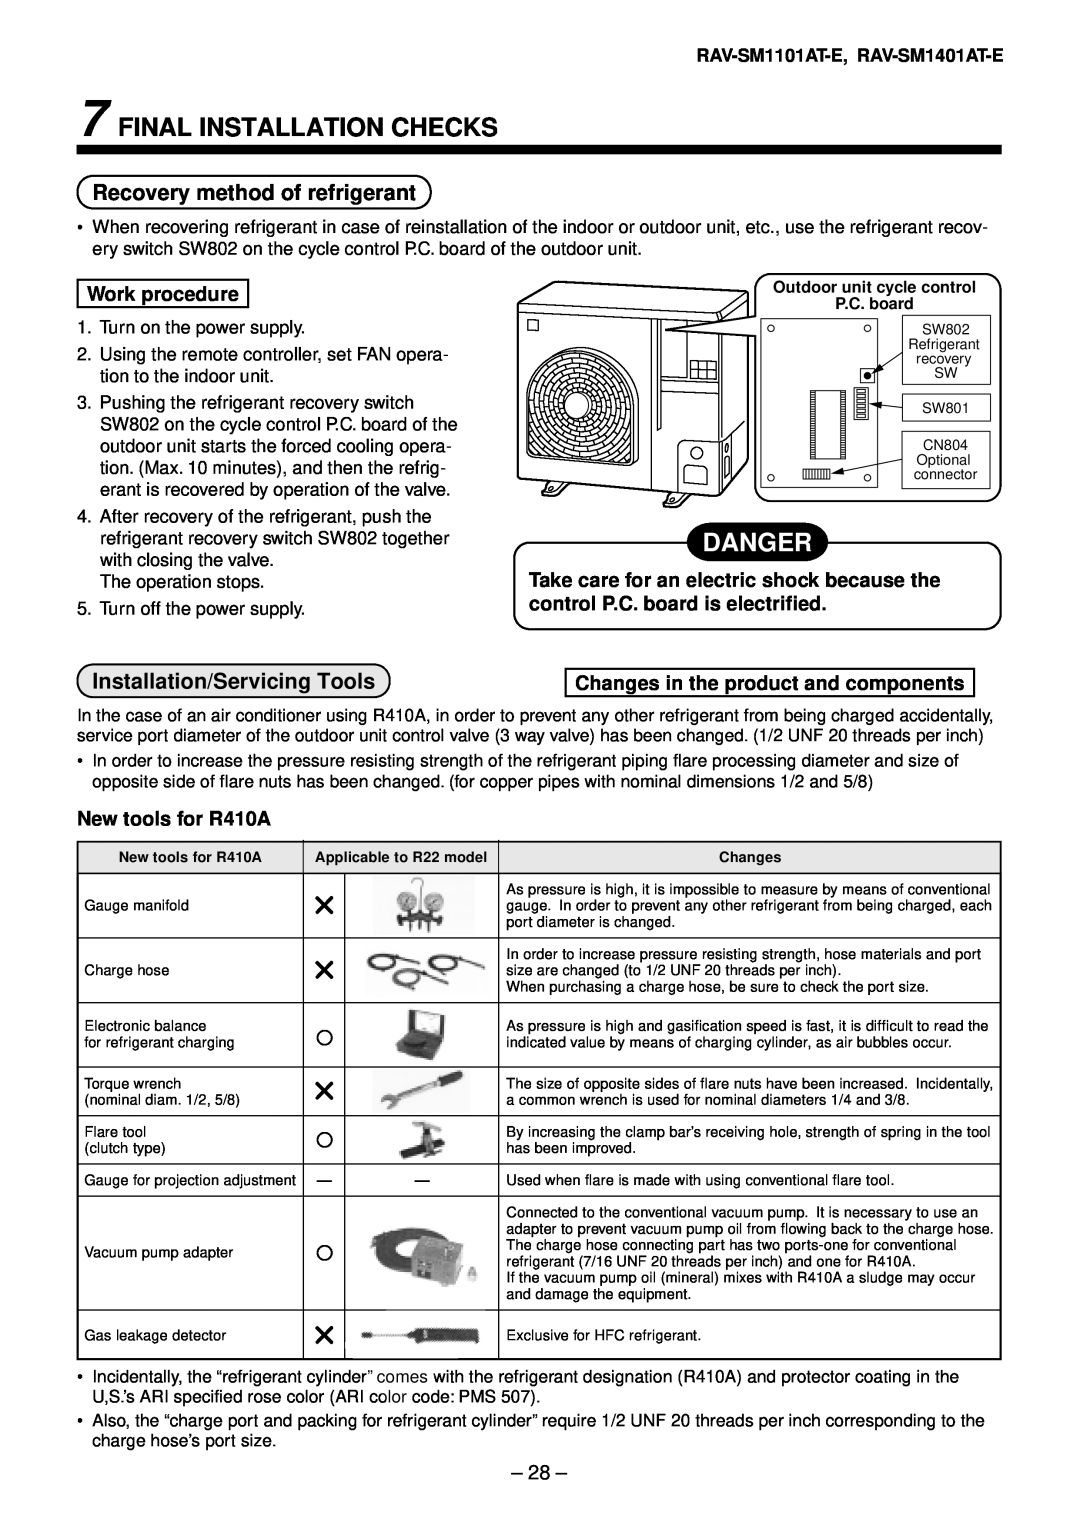 Toshiba RAV-SM1101AT-E, RAV-SM801AT-E Danger, Recovery method of refrigerant, Installation/Servicing Tools, Work procedure 